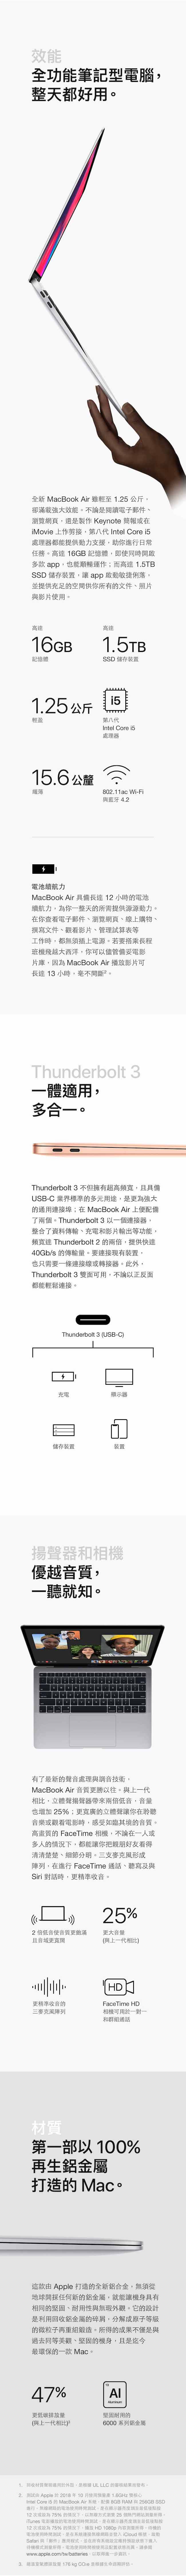 Apple MacBook Air 第八代13吋/i5/8GB/128GB